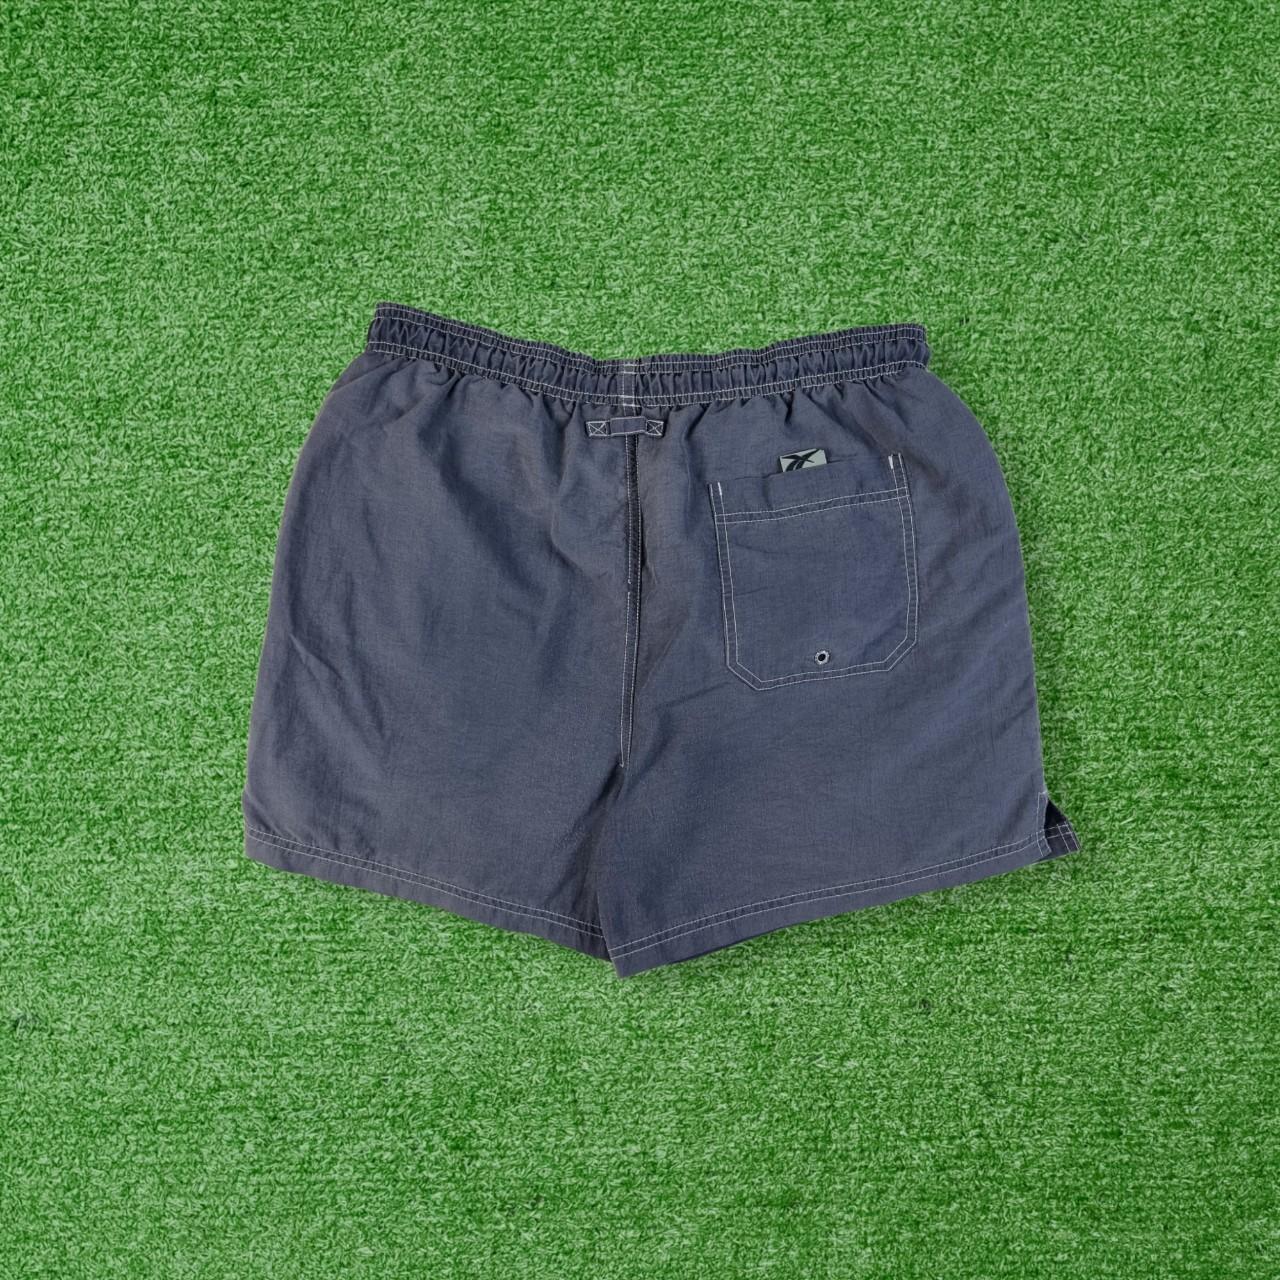 Reebok Men's Blue Shorts | Depop